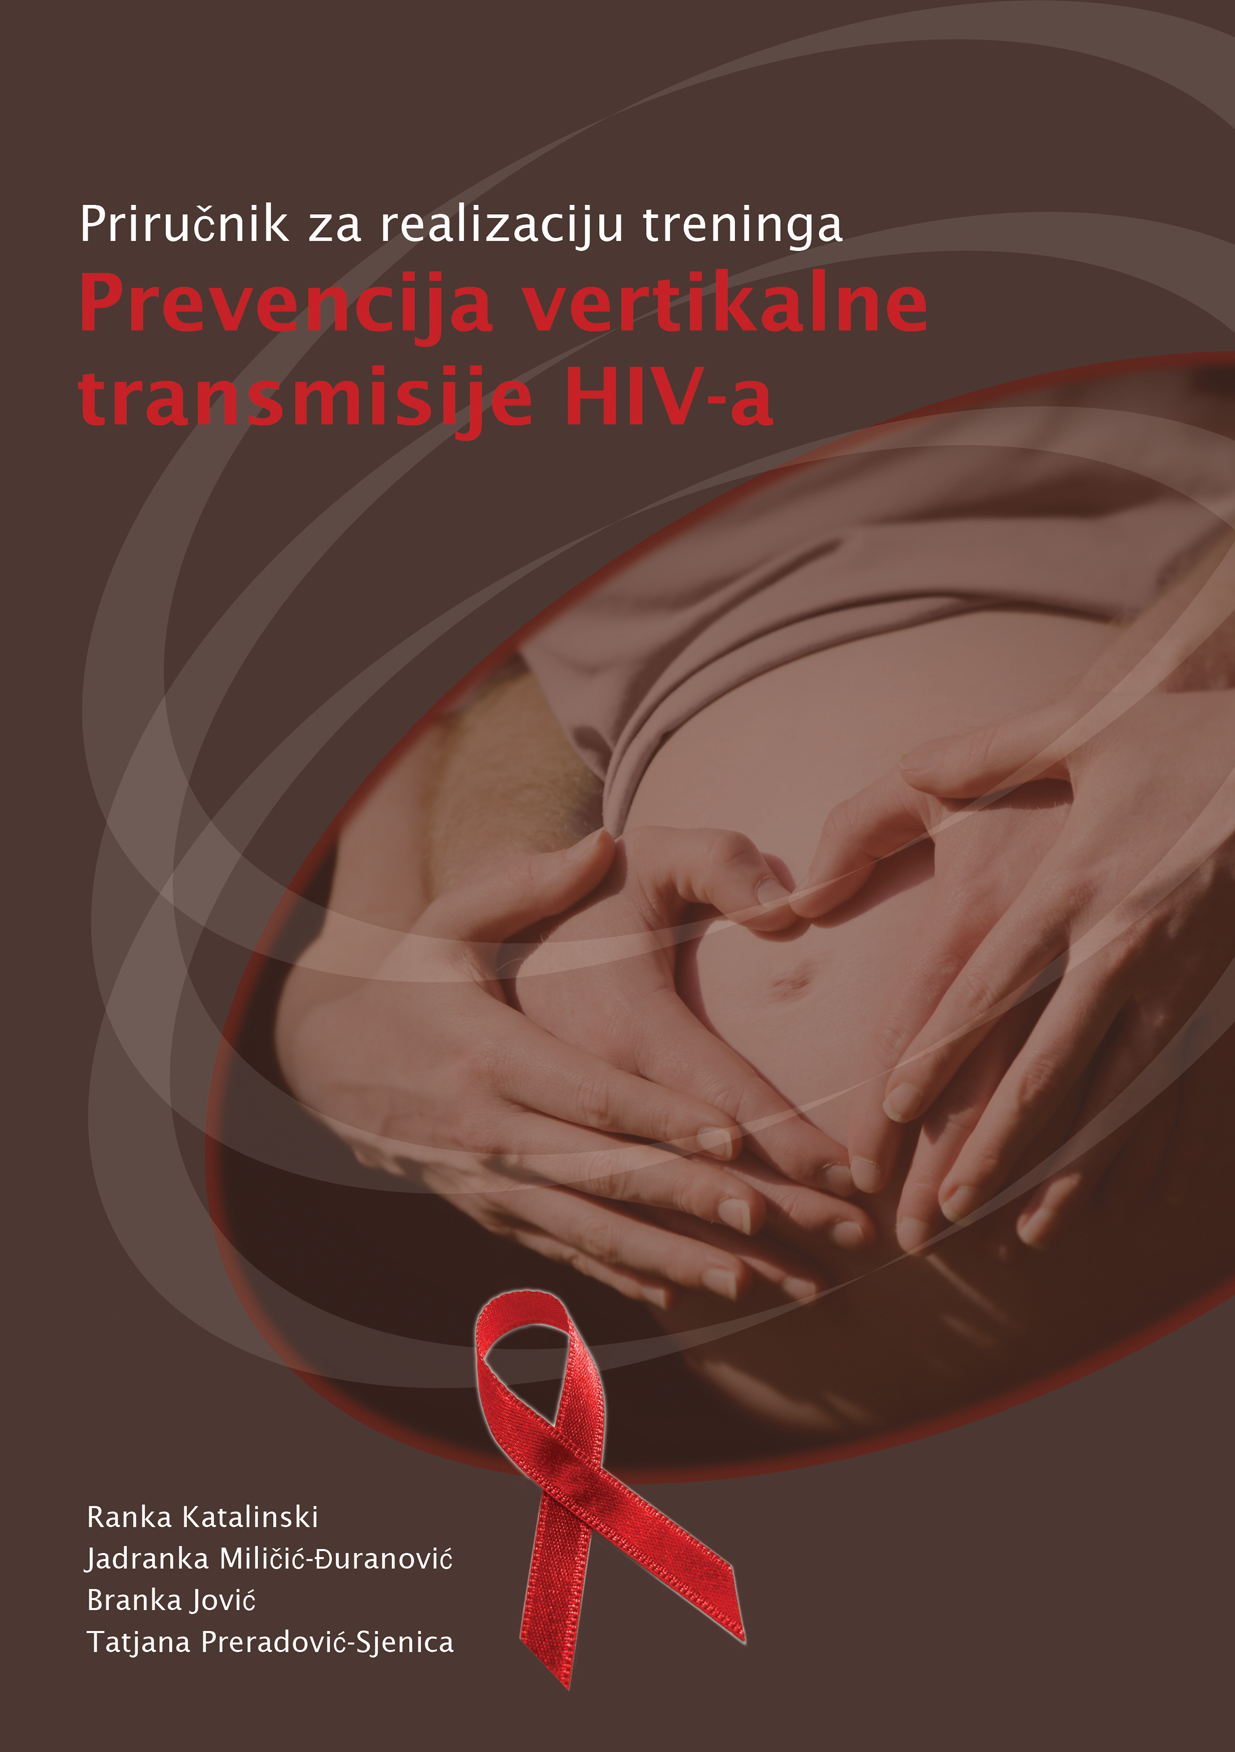 Prevencija vertikalne transmisije HIV-a - Priručnik za realizaciju treninga